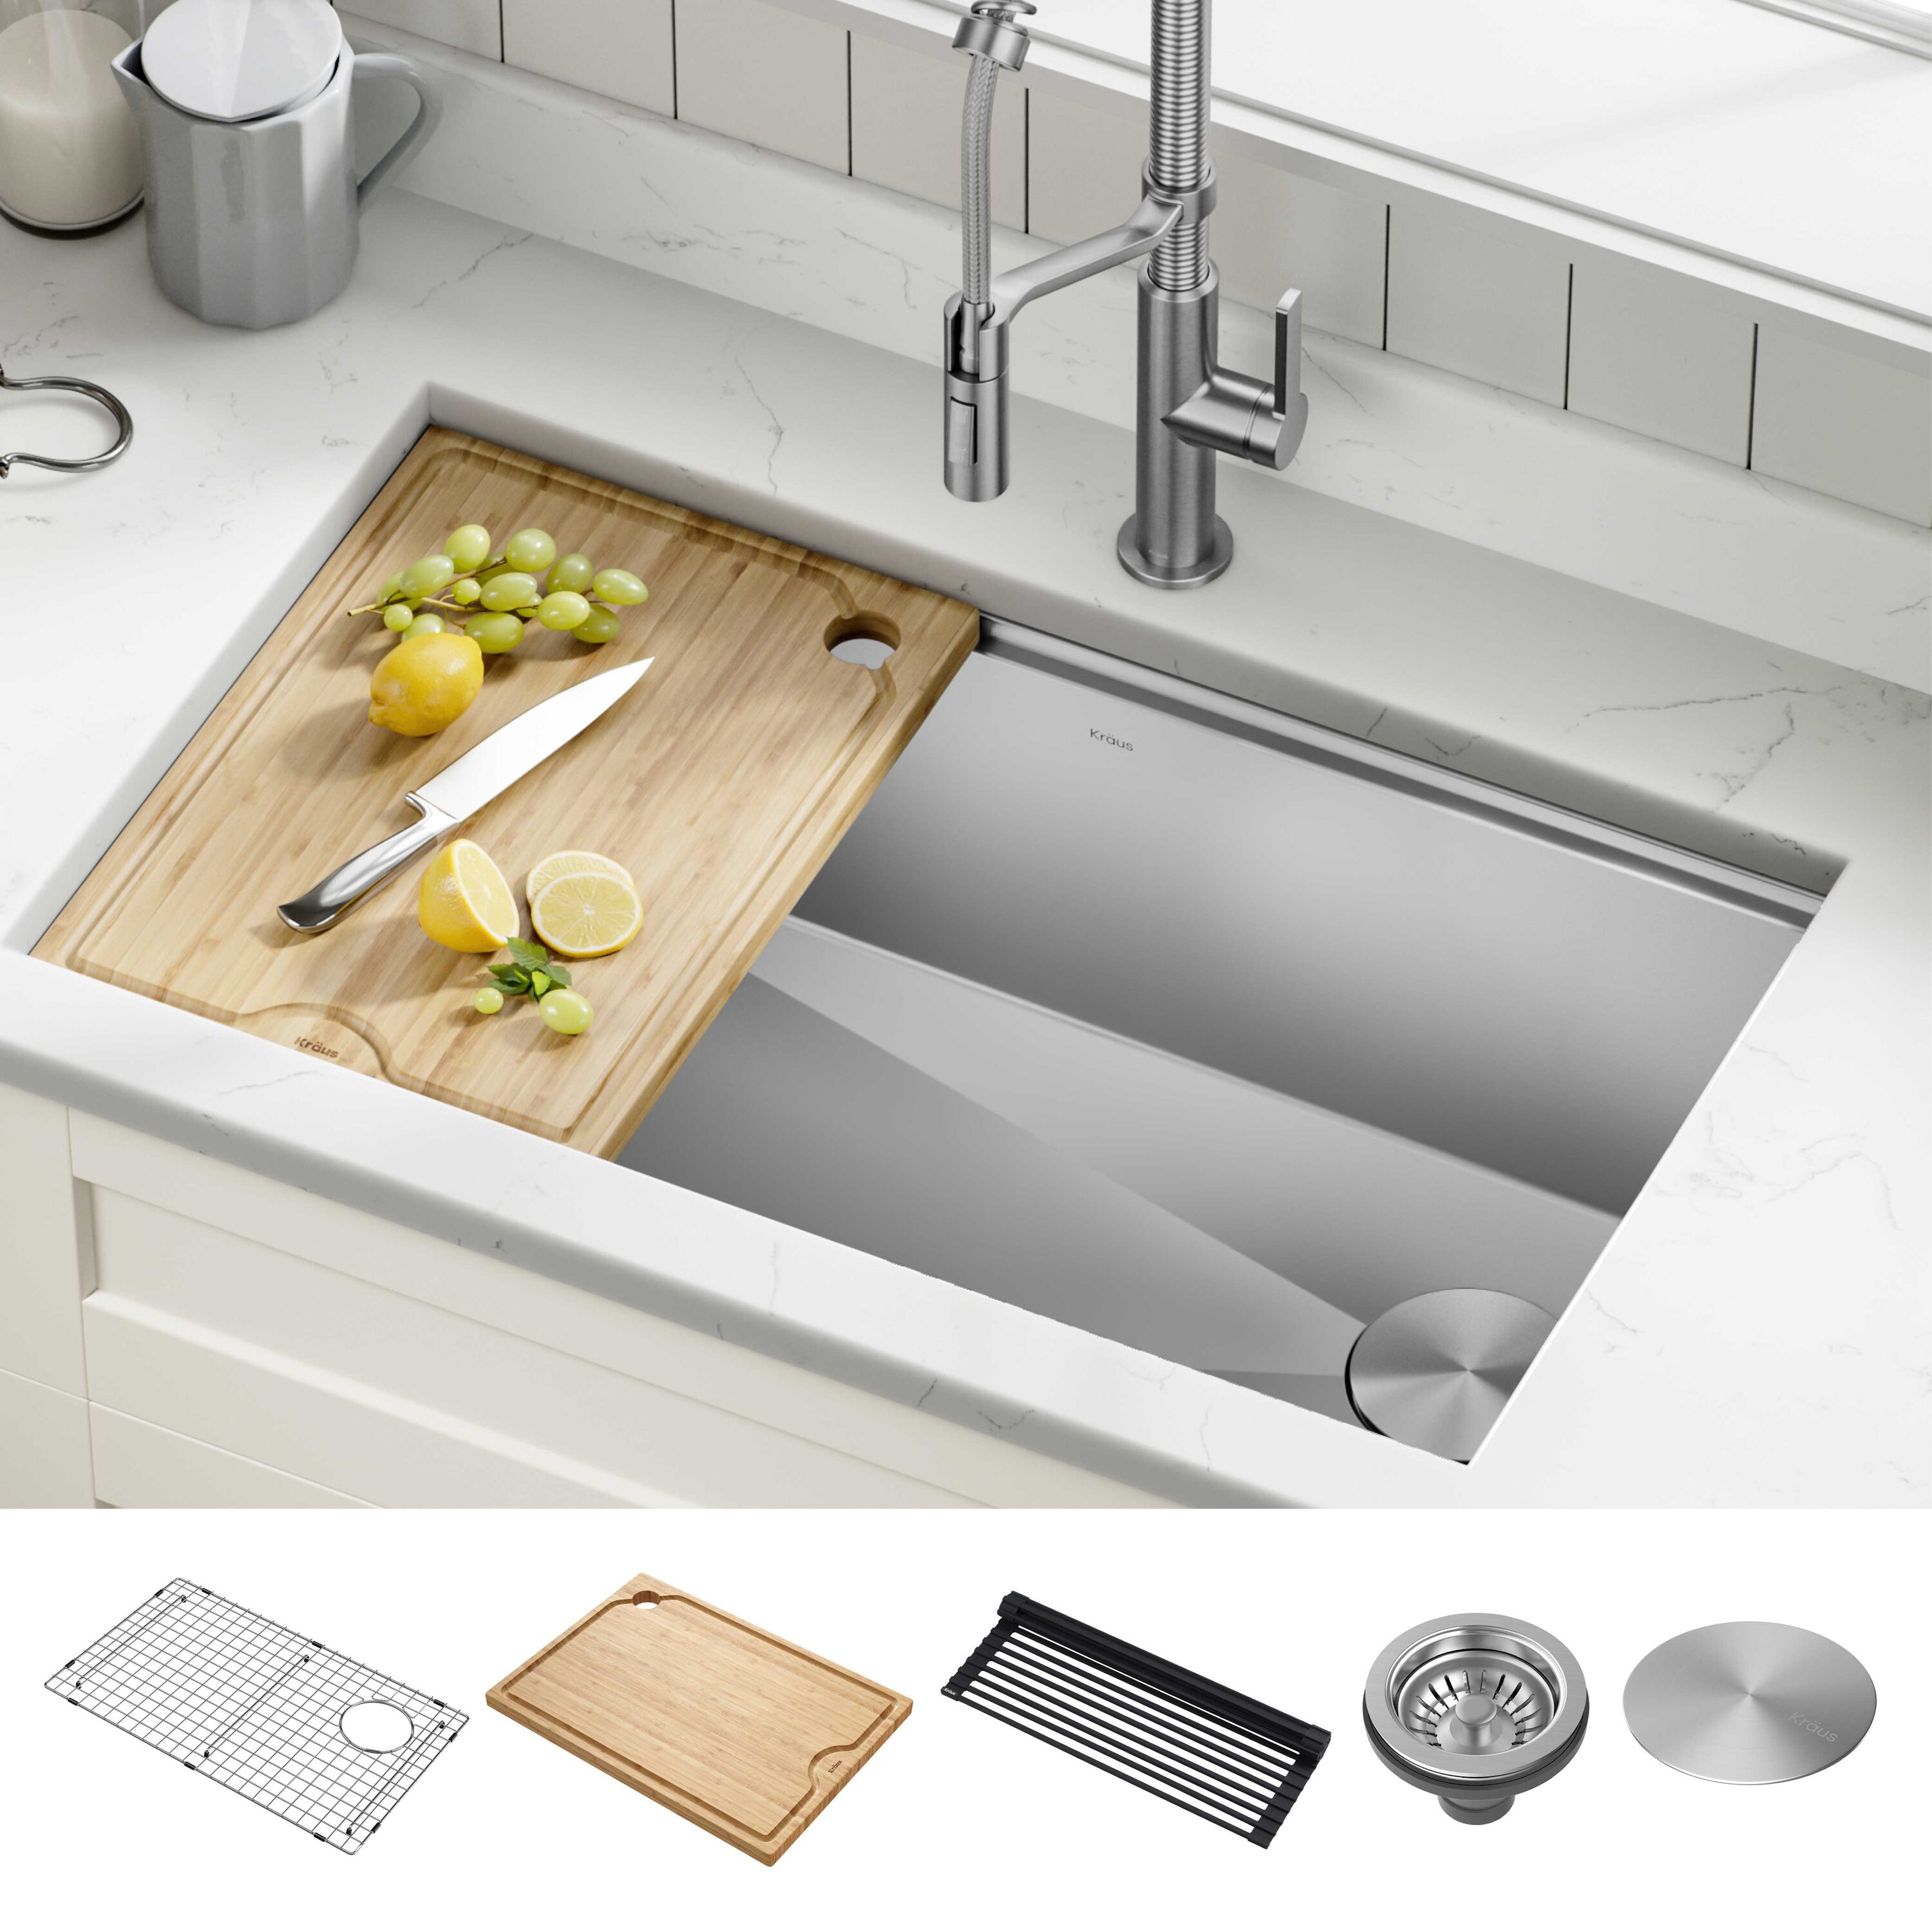 57 undermount Single Bowl kitchen sink with a 10-piece chefs Kit